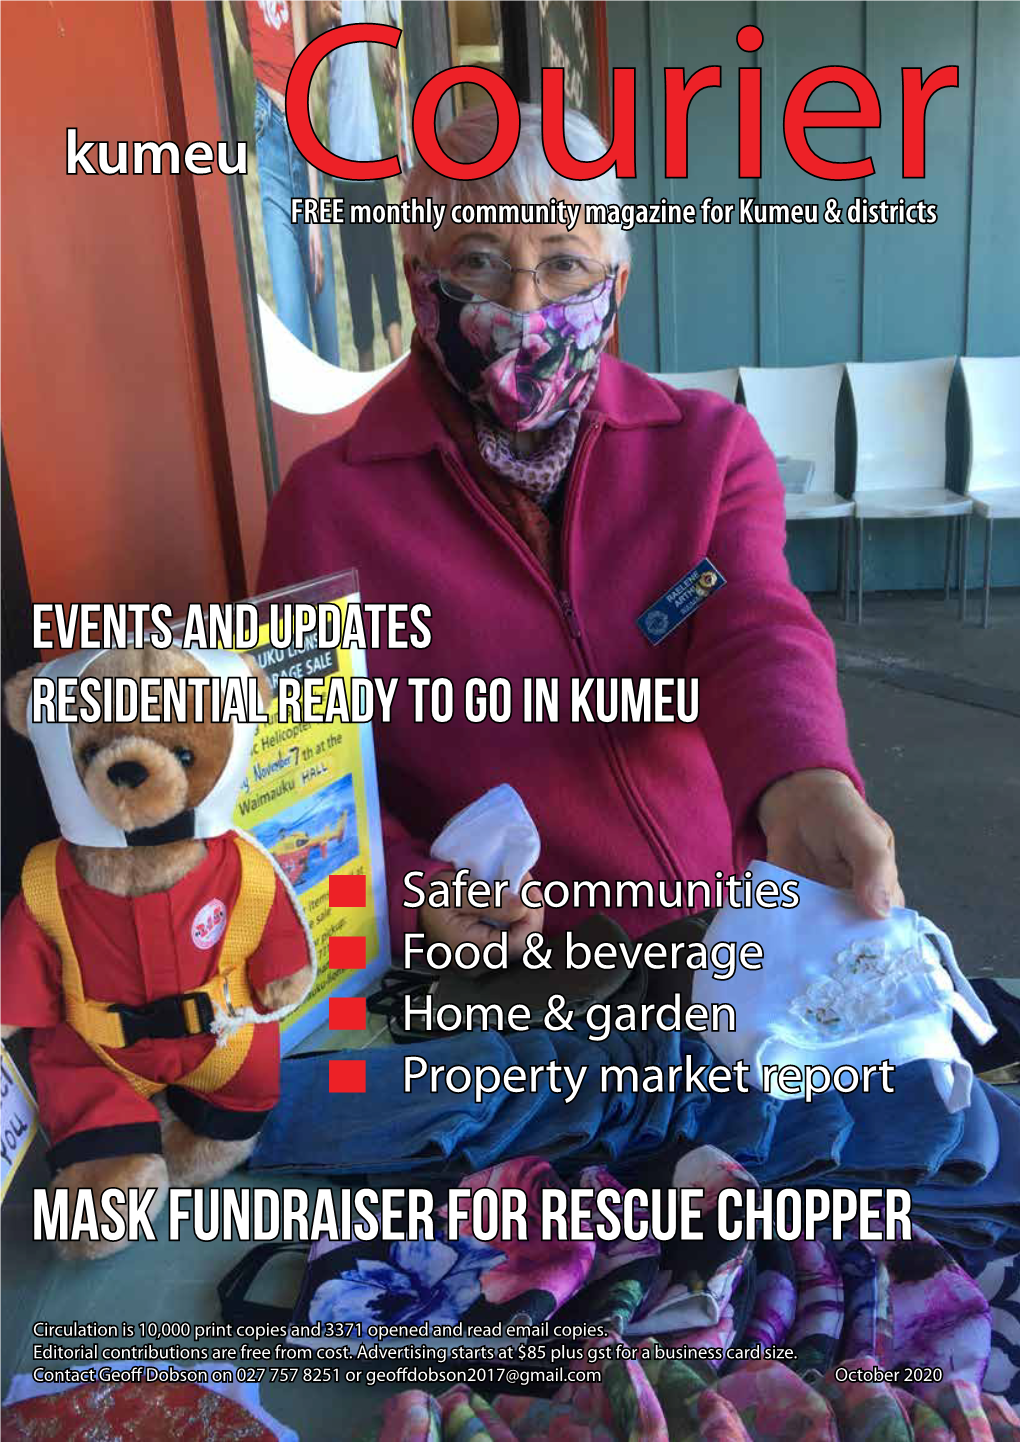 Mask Fundraiser for Rescue Chopper